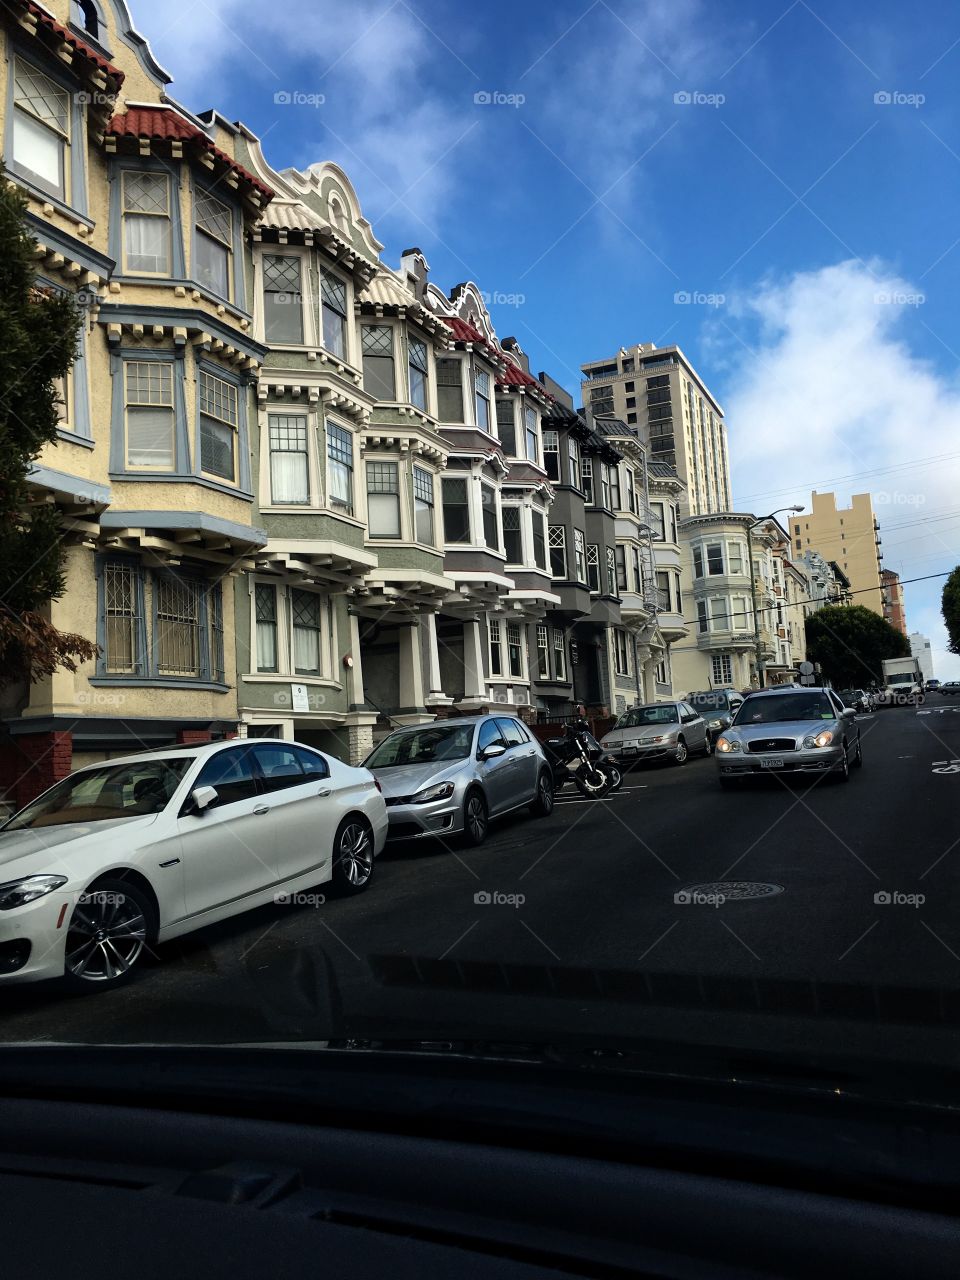 Streets of San Francisco 